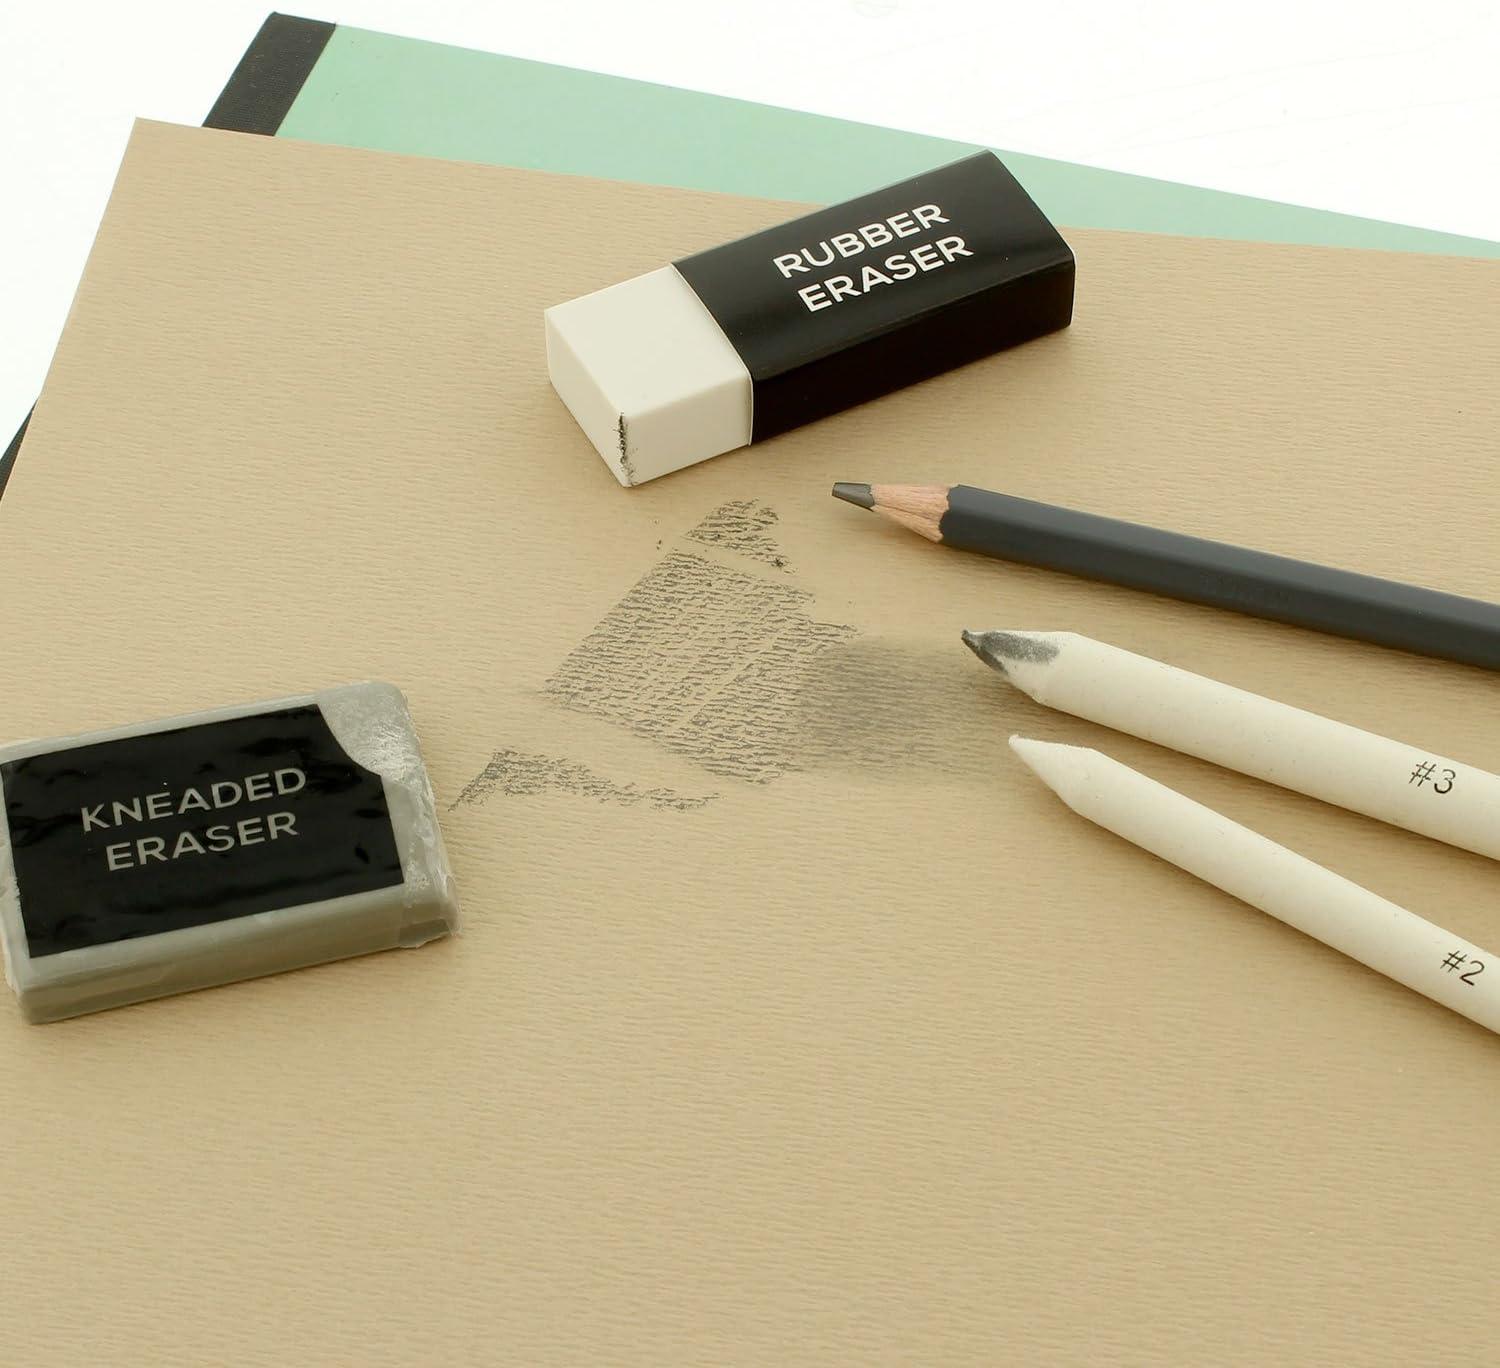 U.S. Art Supply 20 Piece Professional Artist Sketch Set in Hard Storage Case - Sketch & Charcoal Pencils, Pastel, Stumps, Eraser, Sharpeners - Bonus